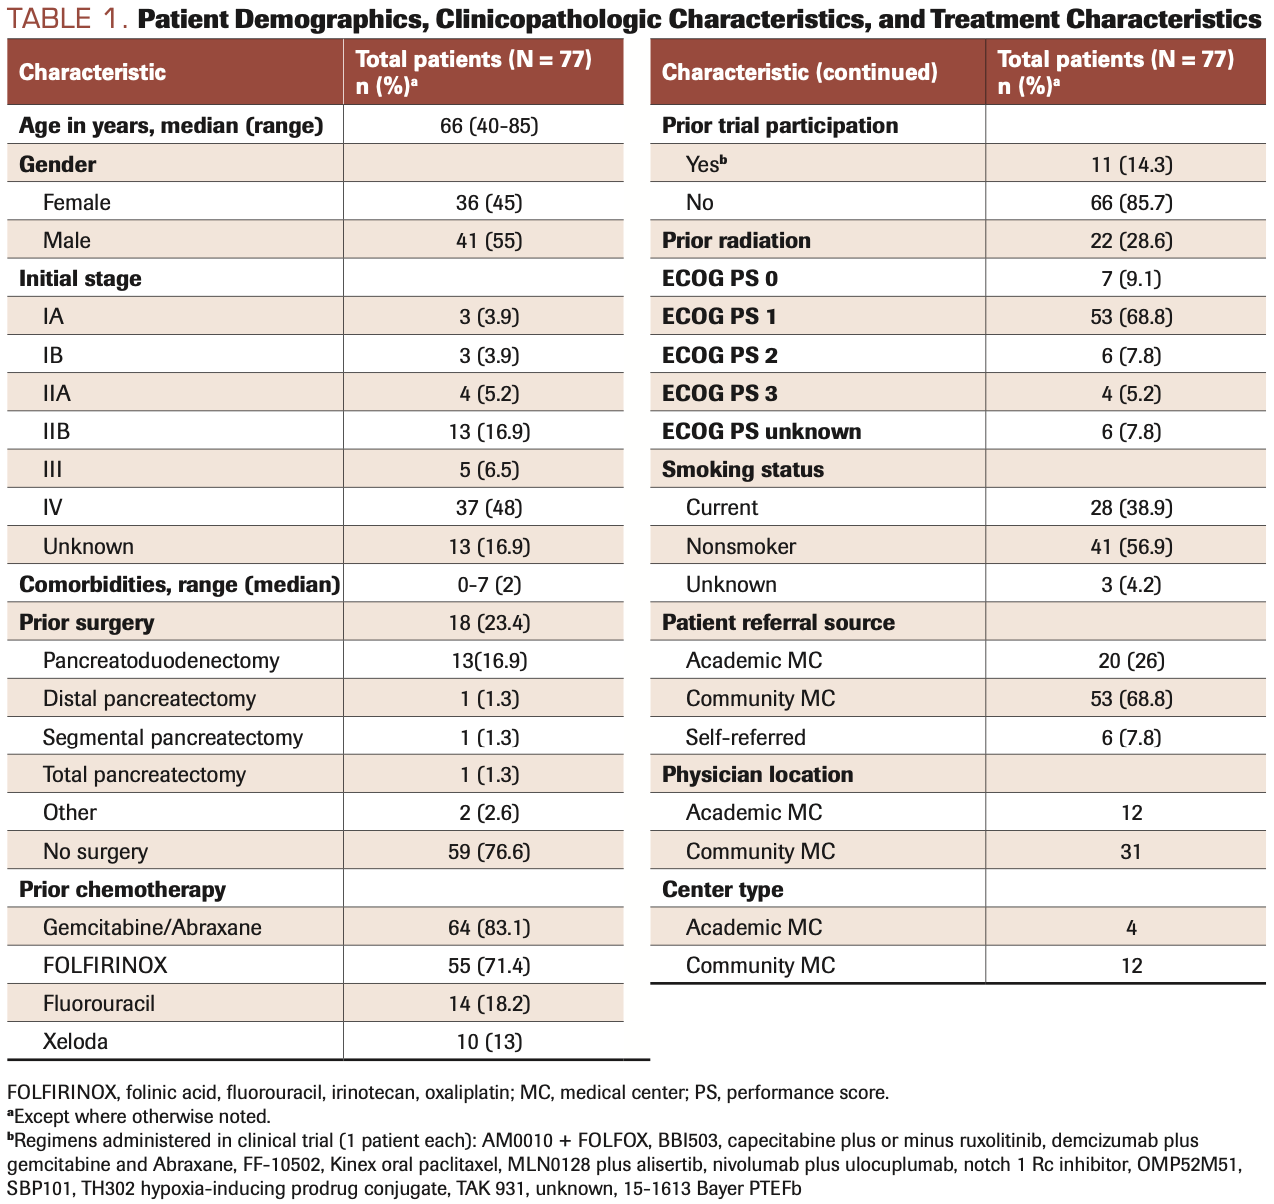 TABLE 1. Patient Demographics, Clinicopathologic Characteristics, and Treatment Characteristics

 

